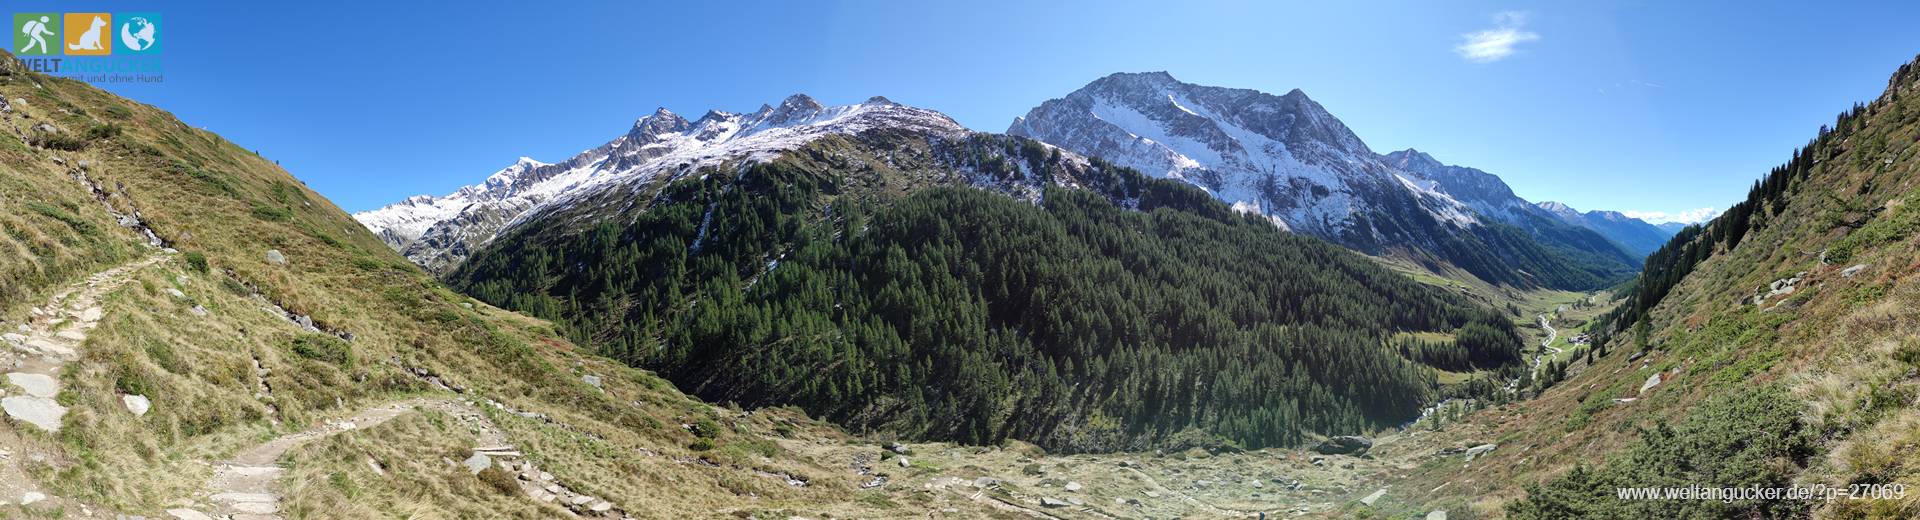 7/7 - Panoramablick vom Krimmler Tauernweg im Südtiroler Naturpark Rieserferner-Ahrn